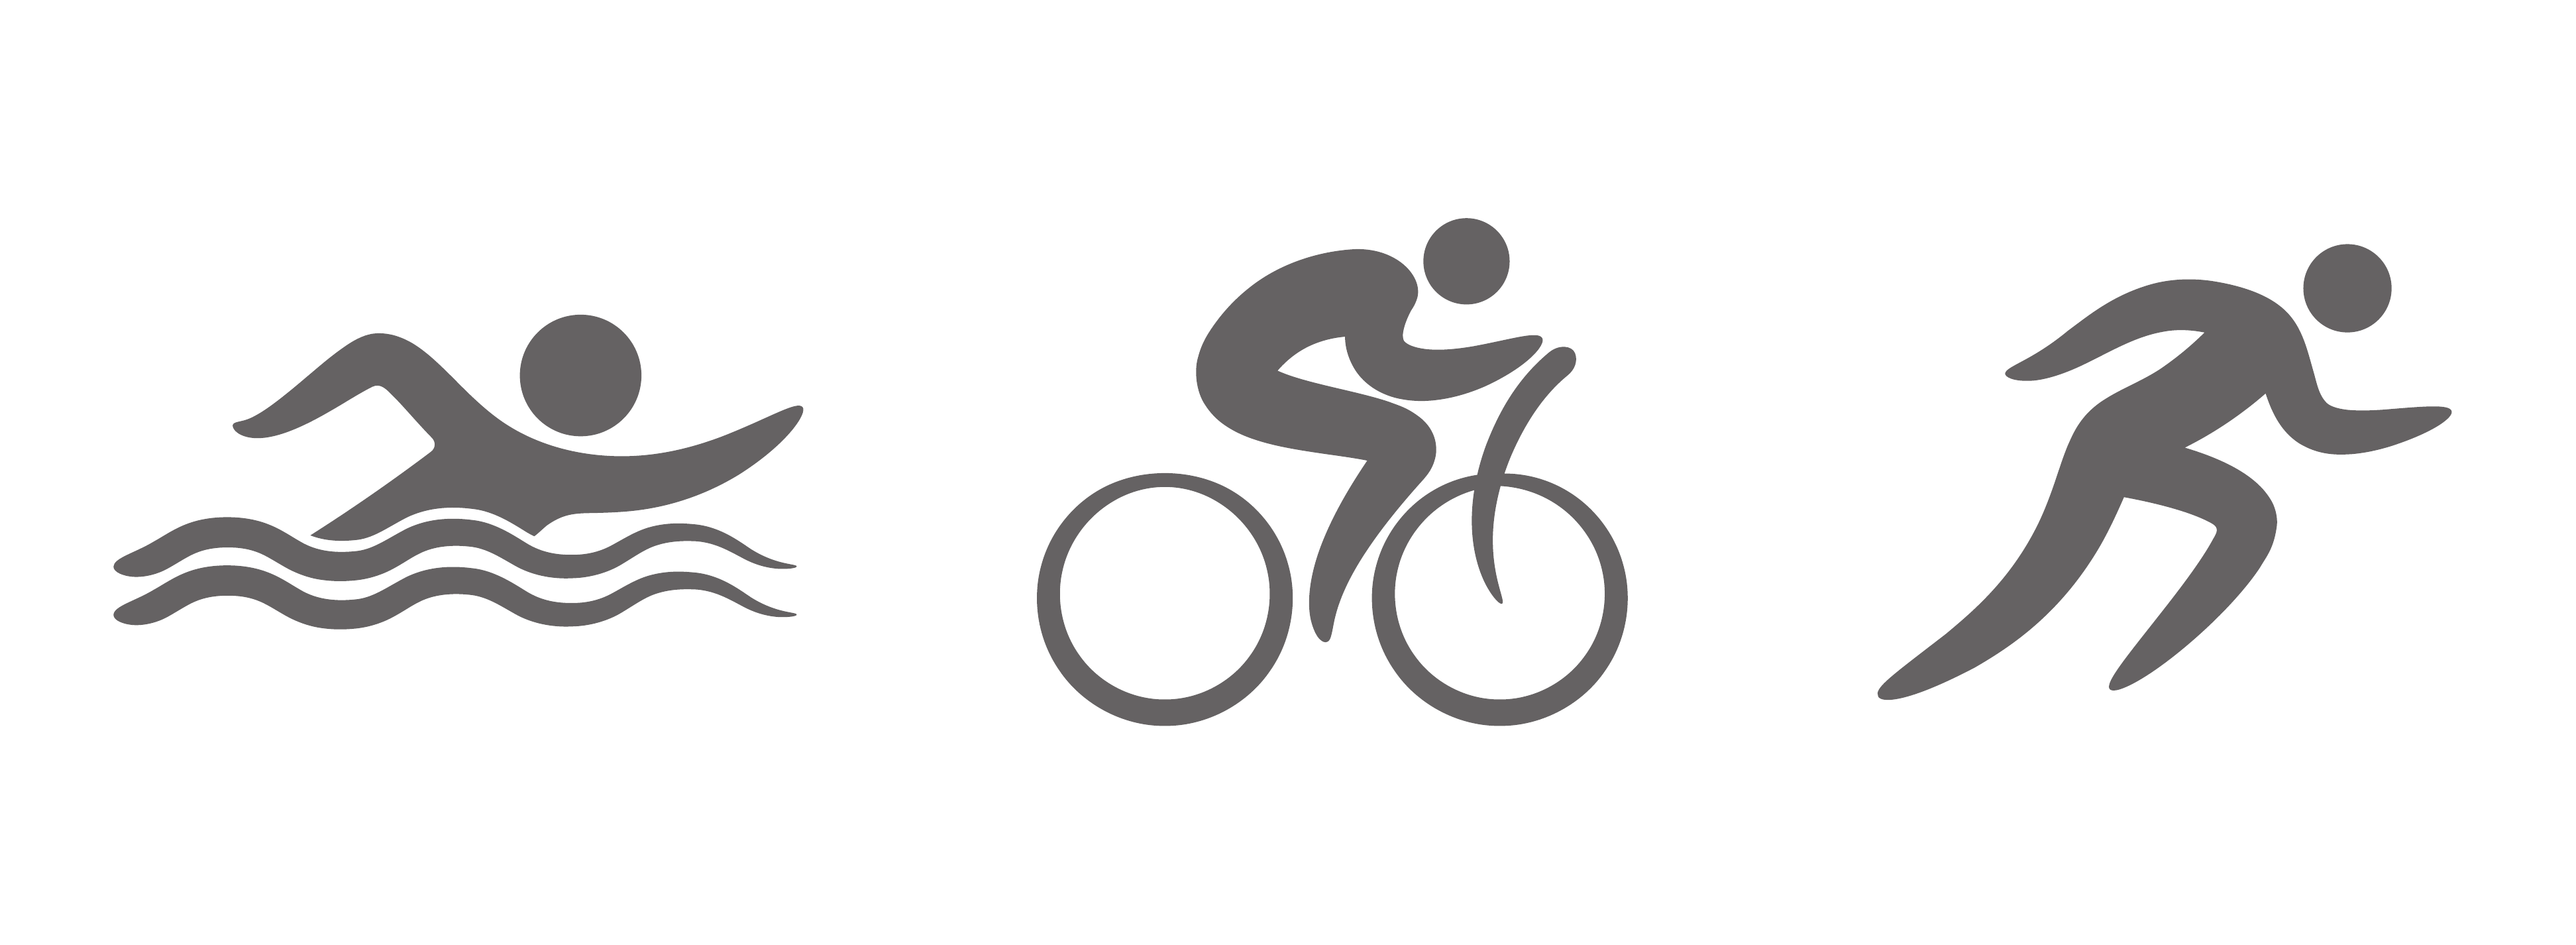 Triathlon Logo - Biomechanics of Triathlon | Venngage - Free Infographic Maker ...